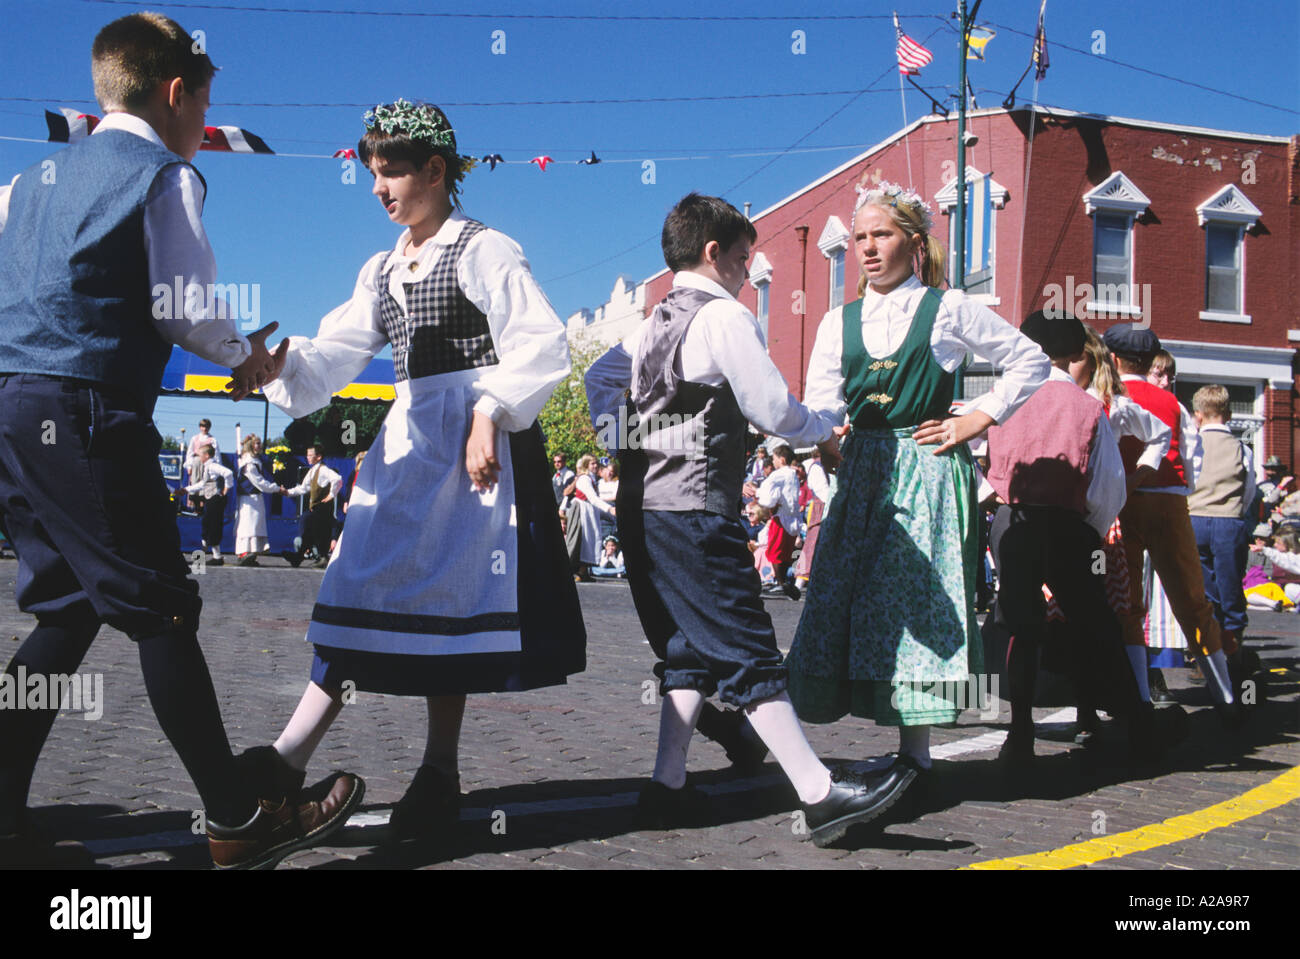 Bailarines en el Svensk Hyllningsfest festival Sueco en Lindsborg, Kansas. Foto de stock